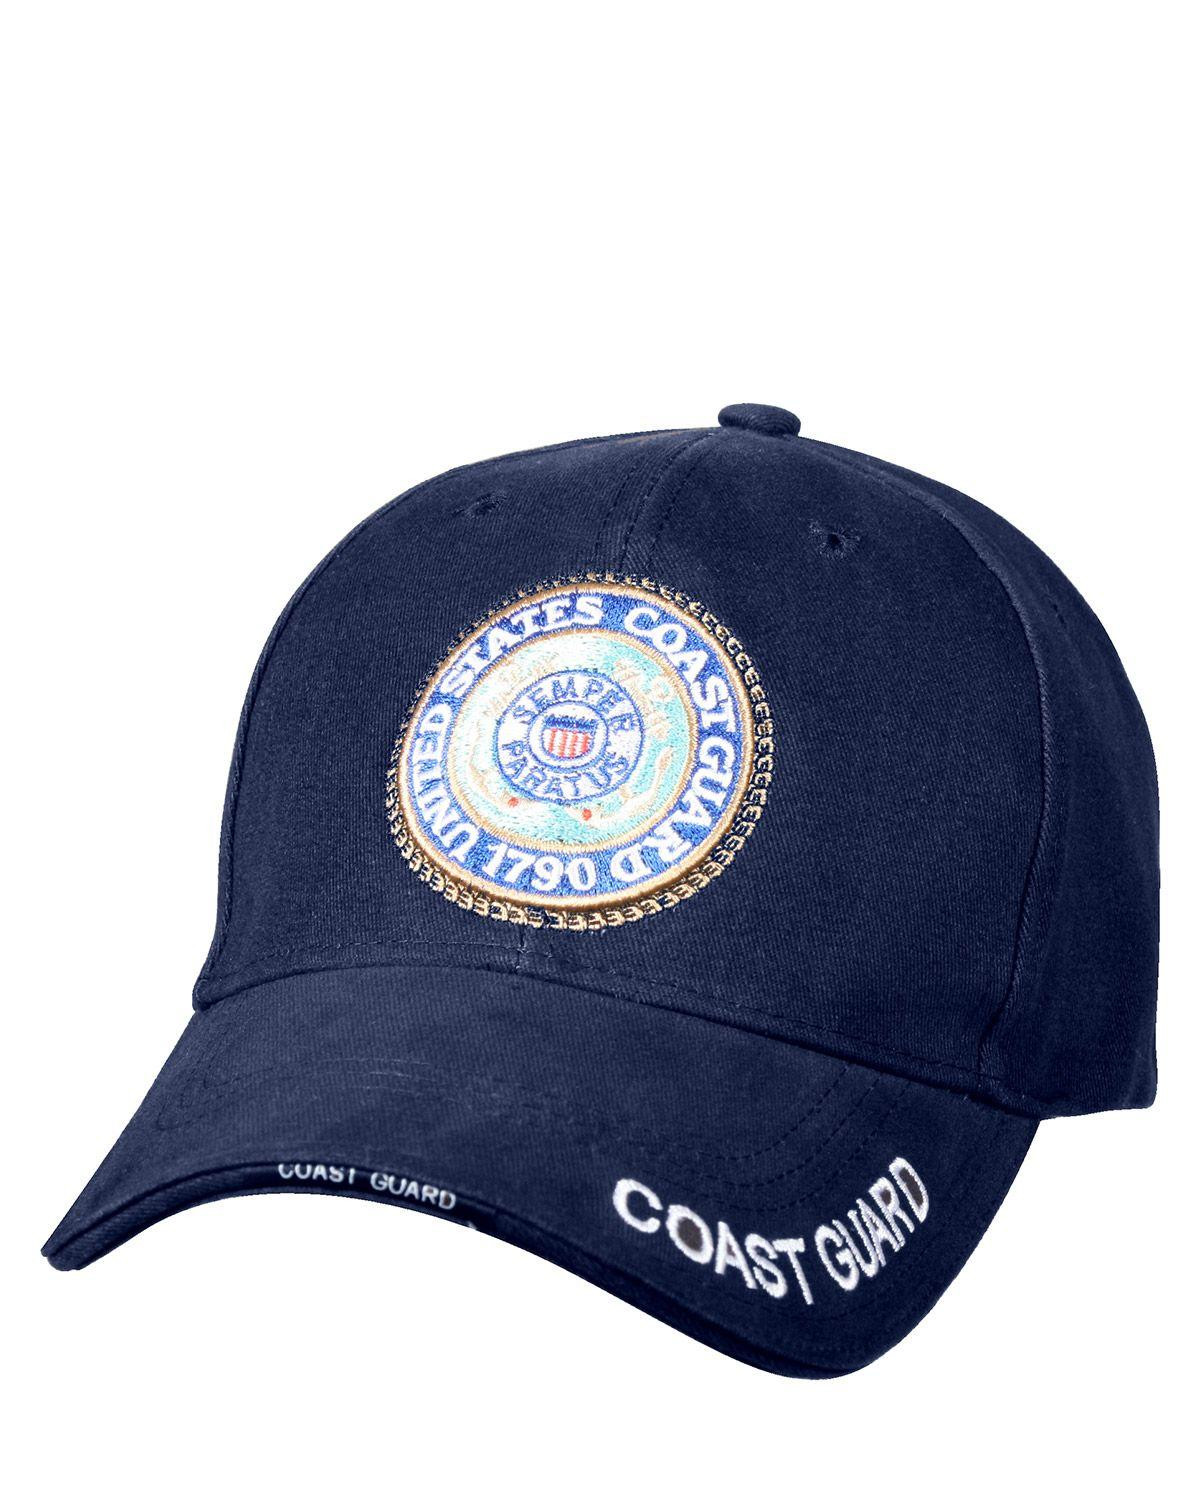 Rothco Deluxe Baseball Cap - U.S. Coast Guard (Navy m. Coast Guard, One Size)